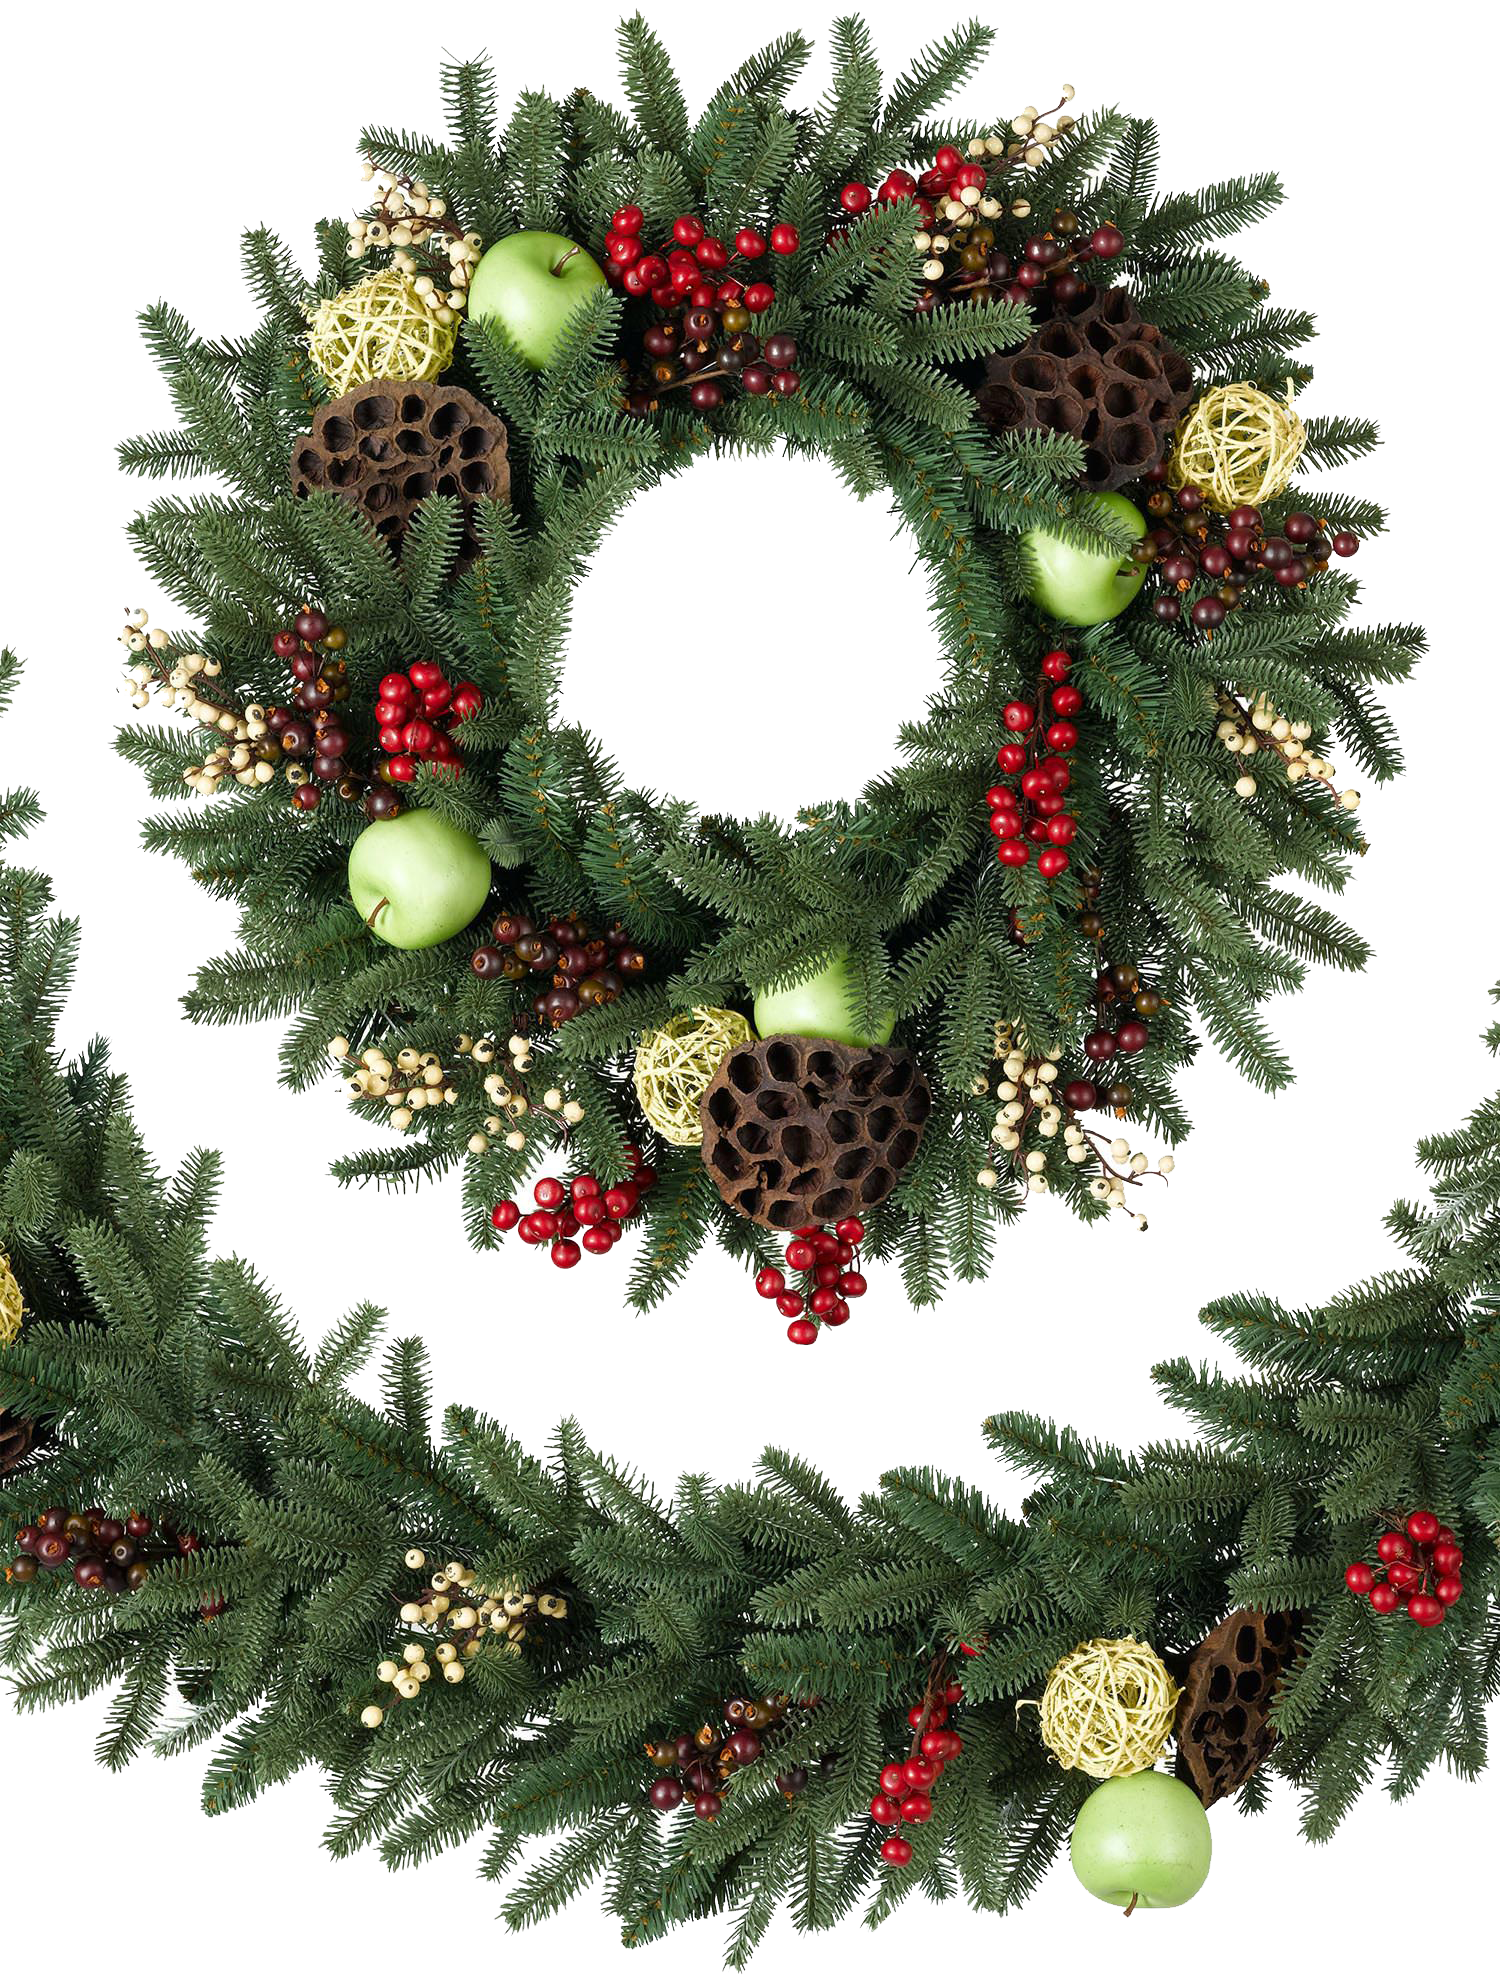 Download Christmas Wreath Transparent Background HQ PNG Image | FreePNGImg